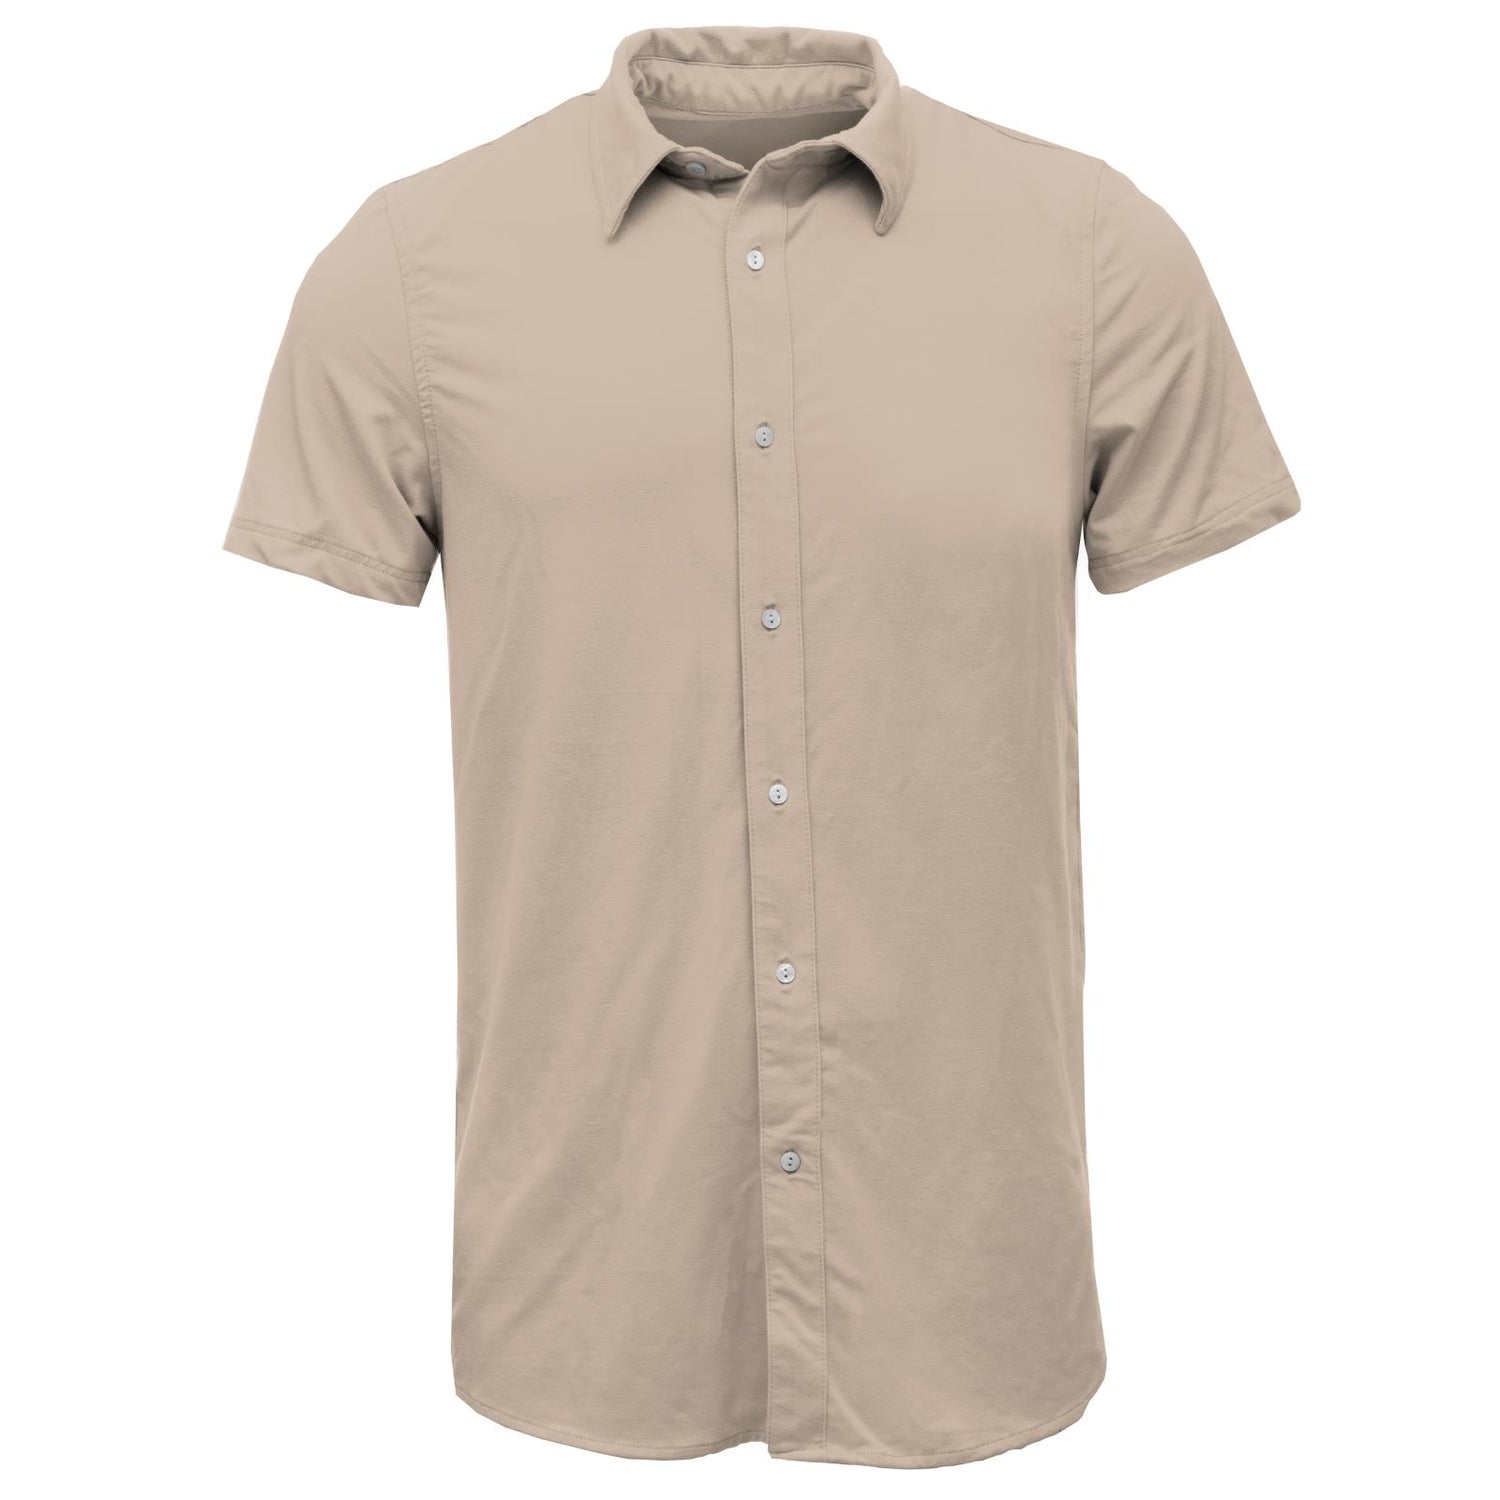 Men's Short Sleeve Woven Button Down Shirt in Burlap